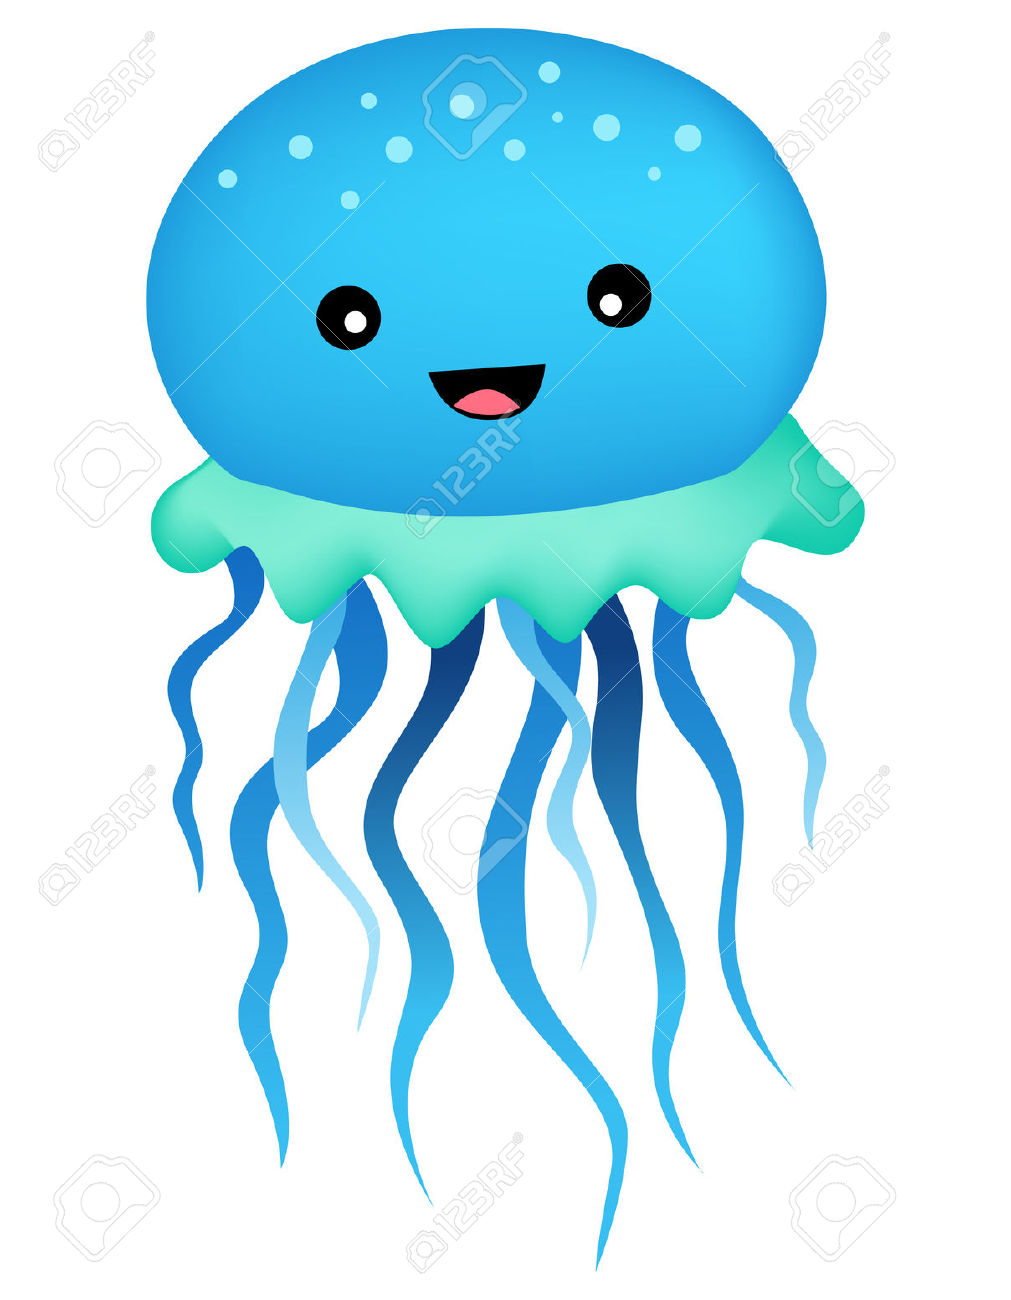 animated jellyfish clipart - photo #46